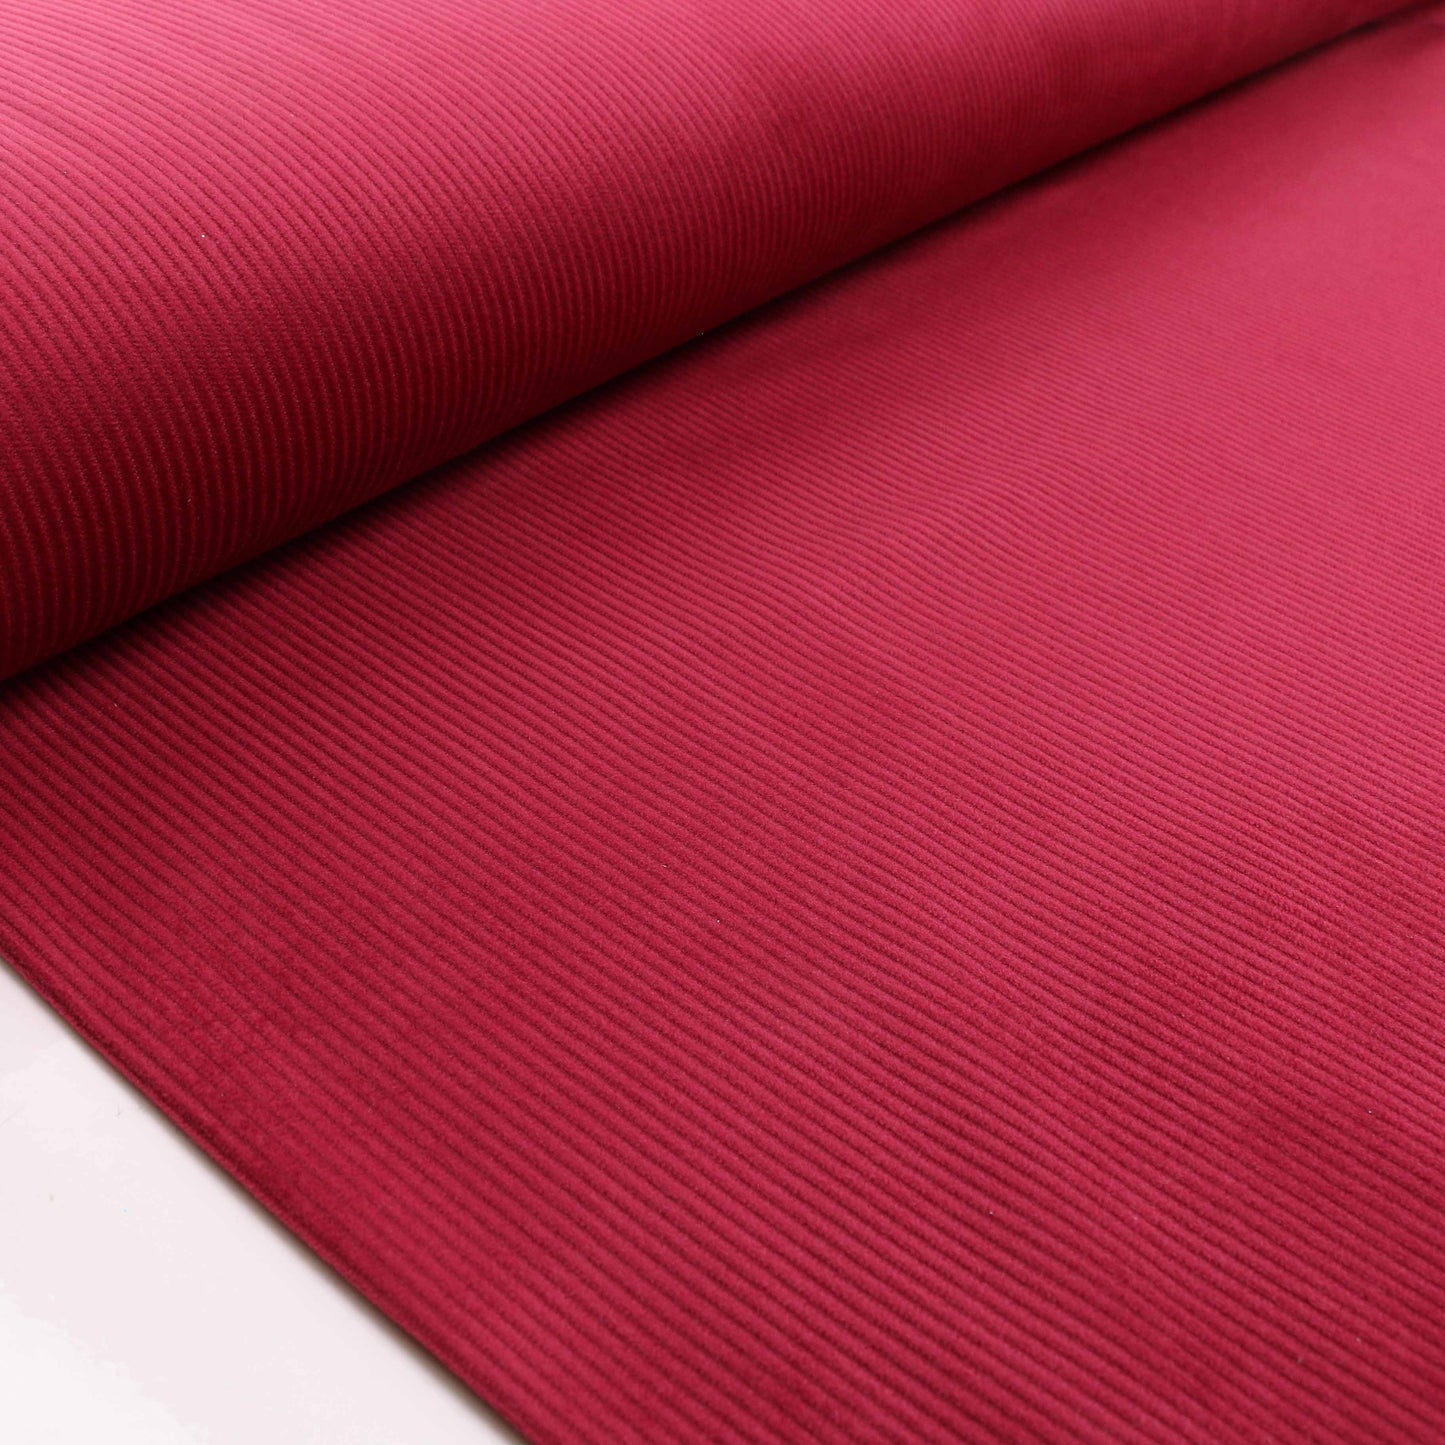 Corduroy Knit Fabric - Denim, Mustard, Wine, Red, Green